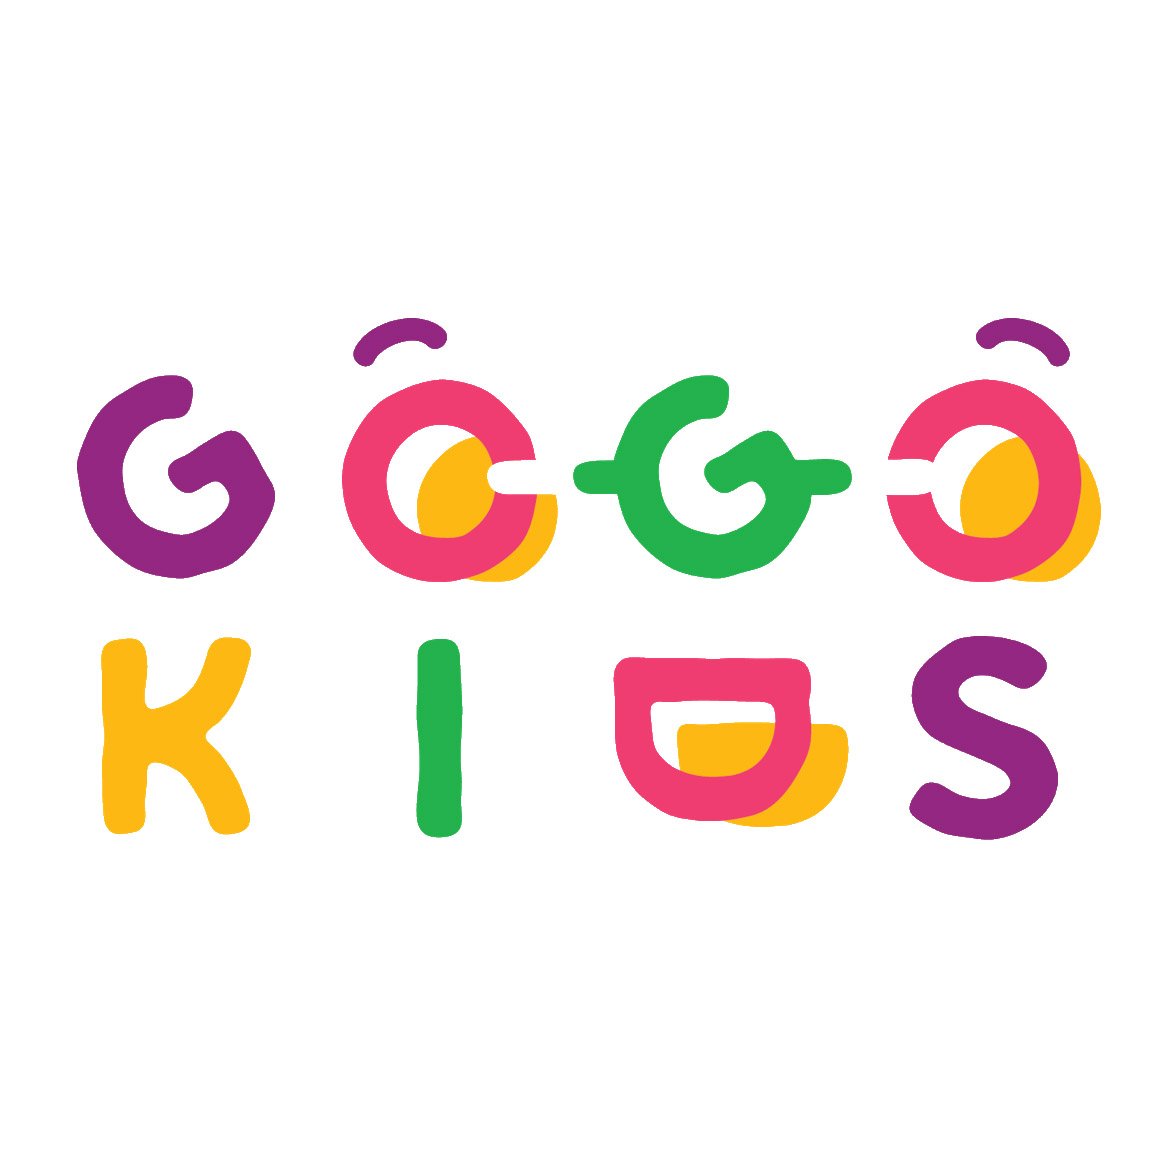 GoGoKids的标志色彩缤纷，而且内藏笑脸，皆因张嫣淳希望每个小孩都能快乐成长，生活多姿多彩。